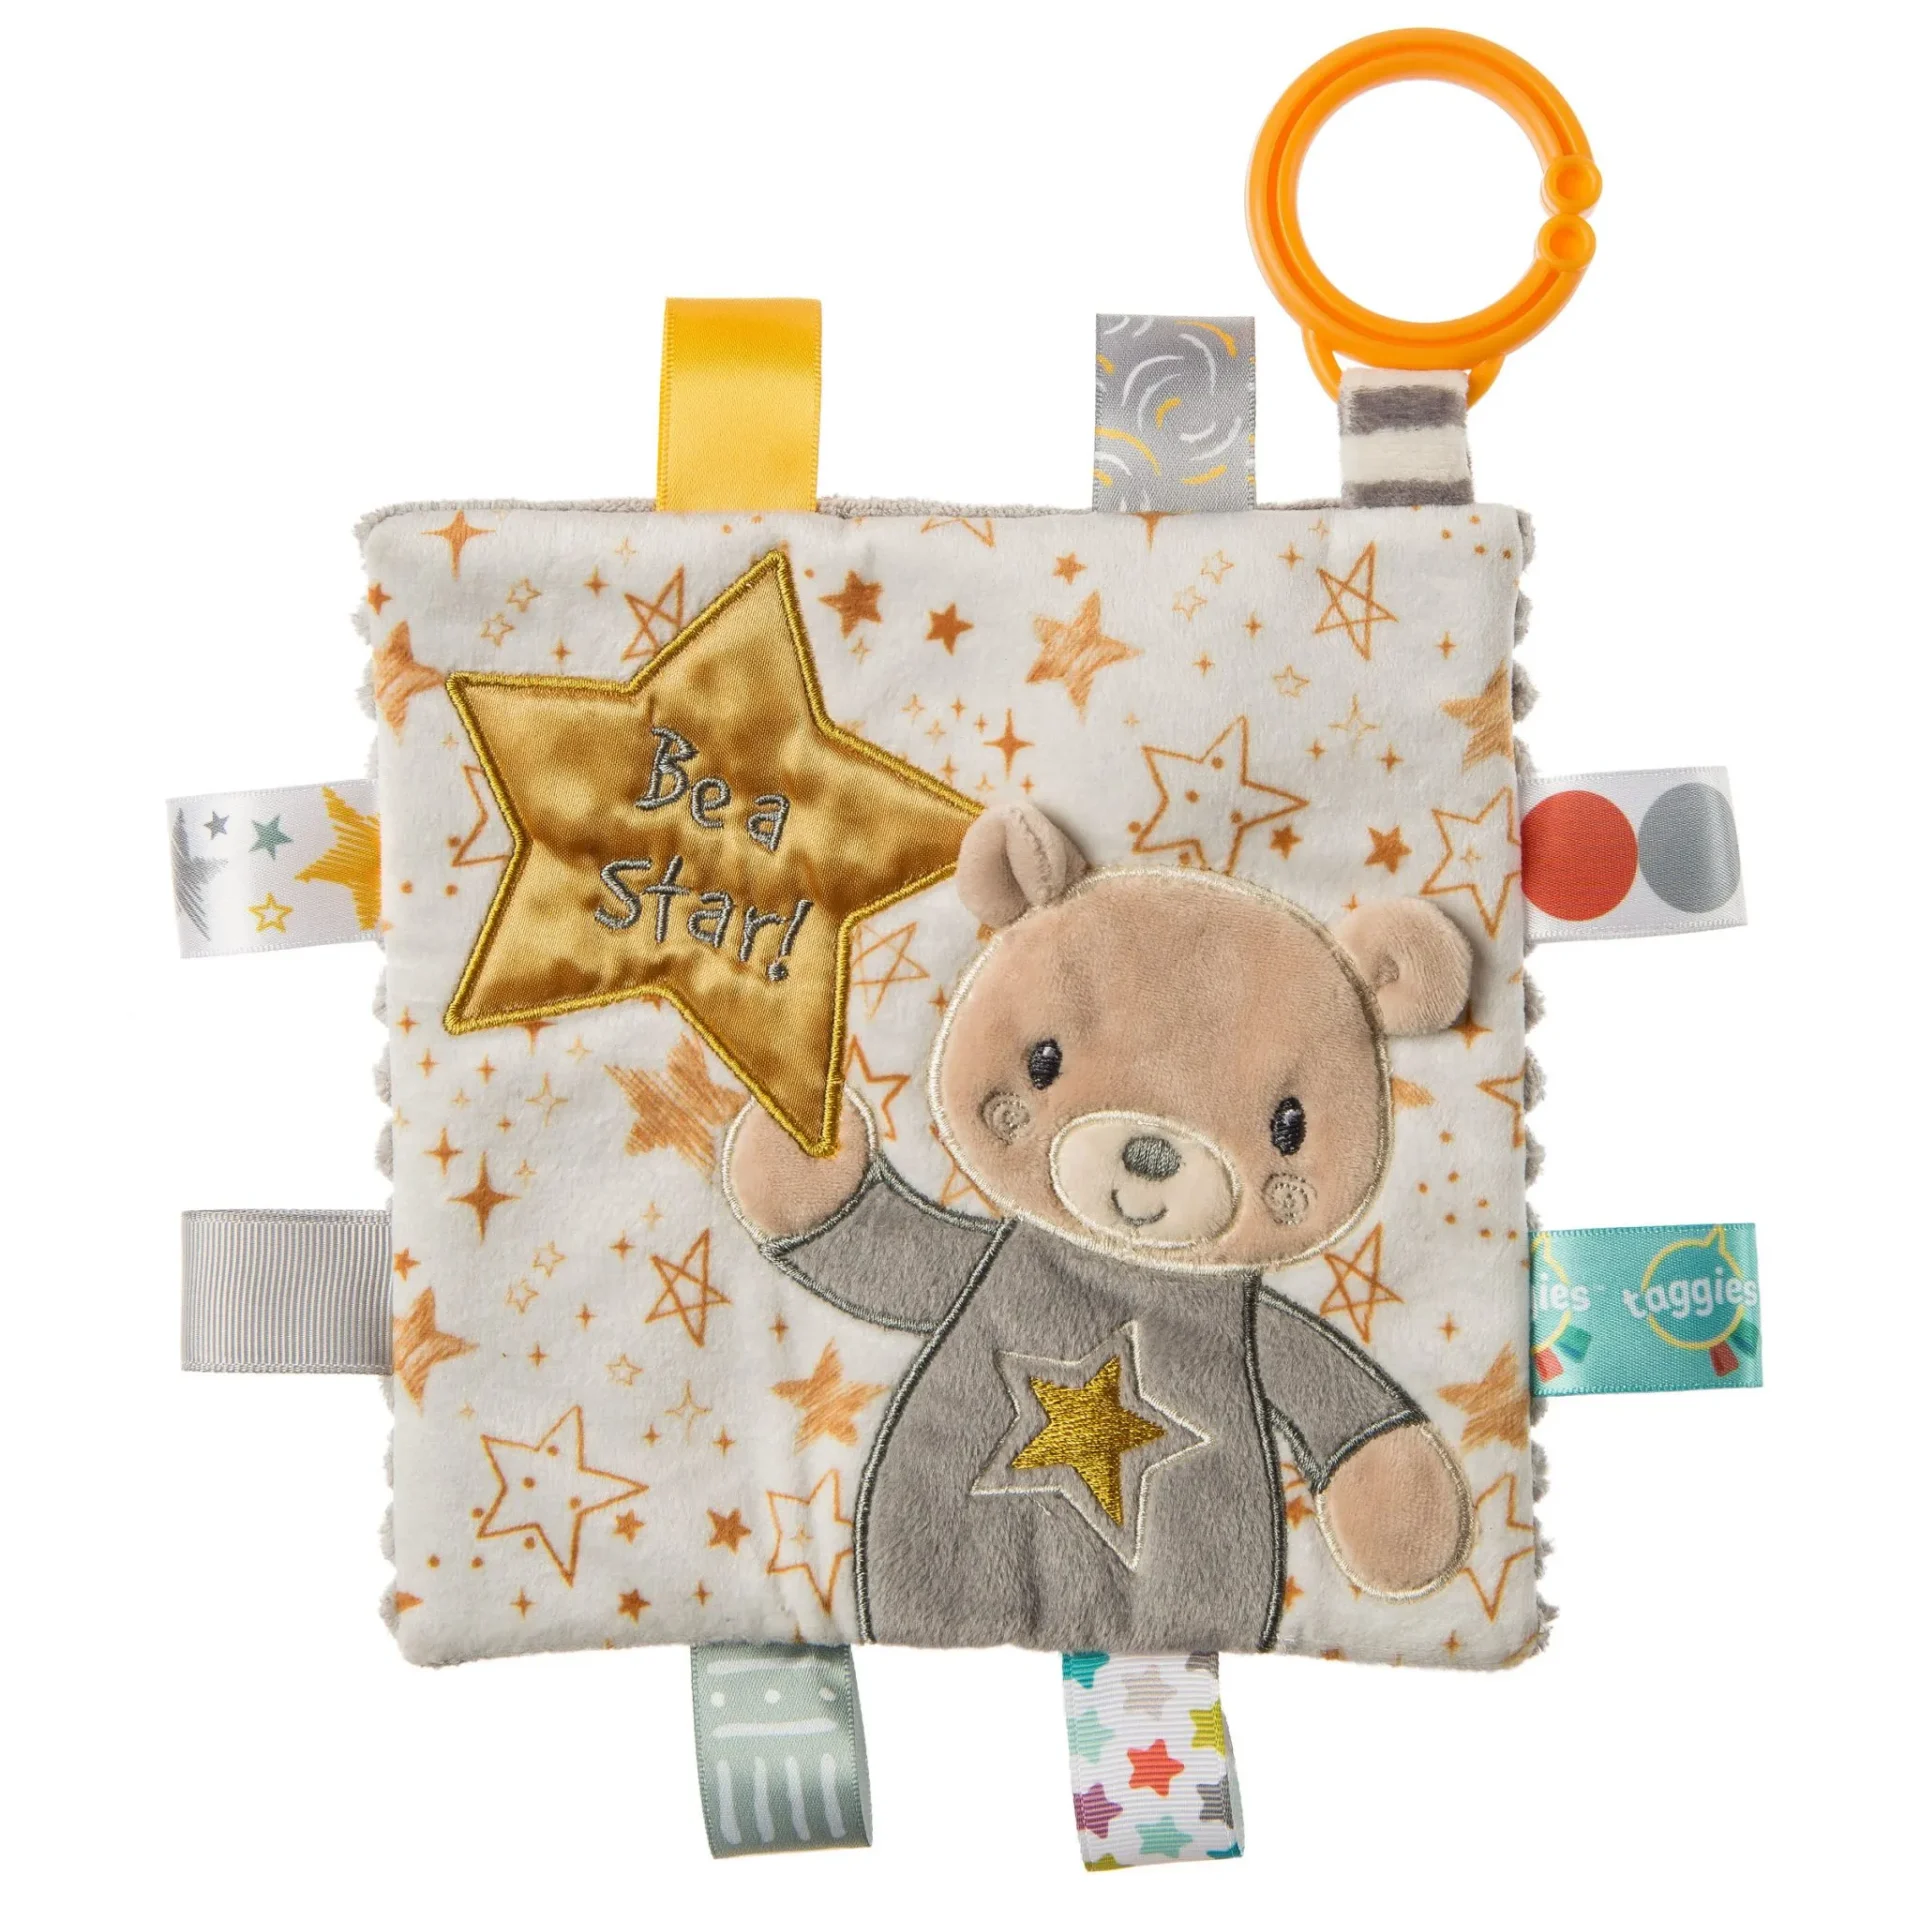 Be A Star illustration of a teddy bear ringer